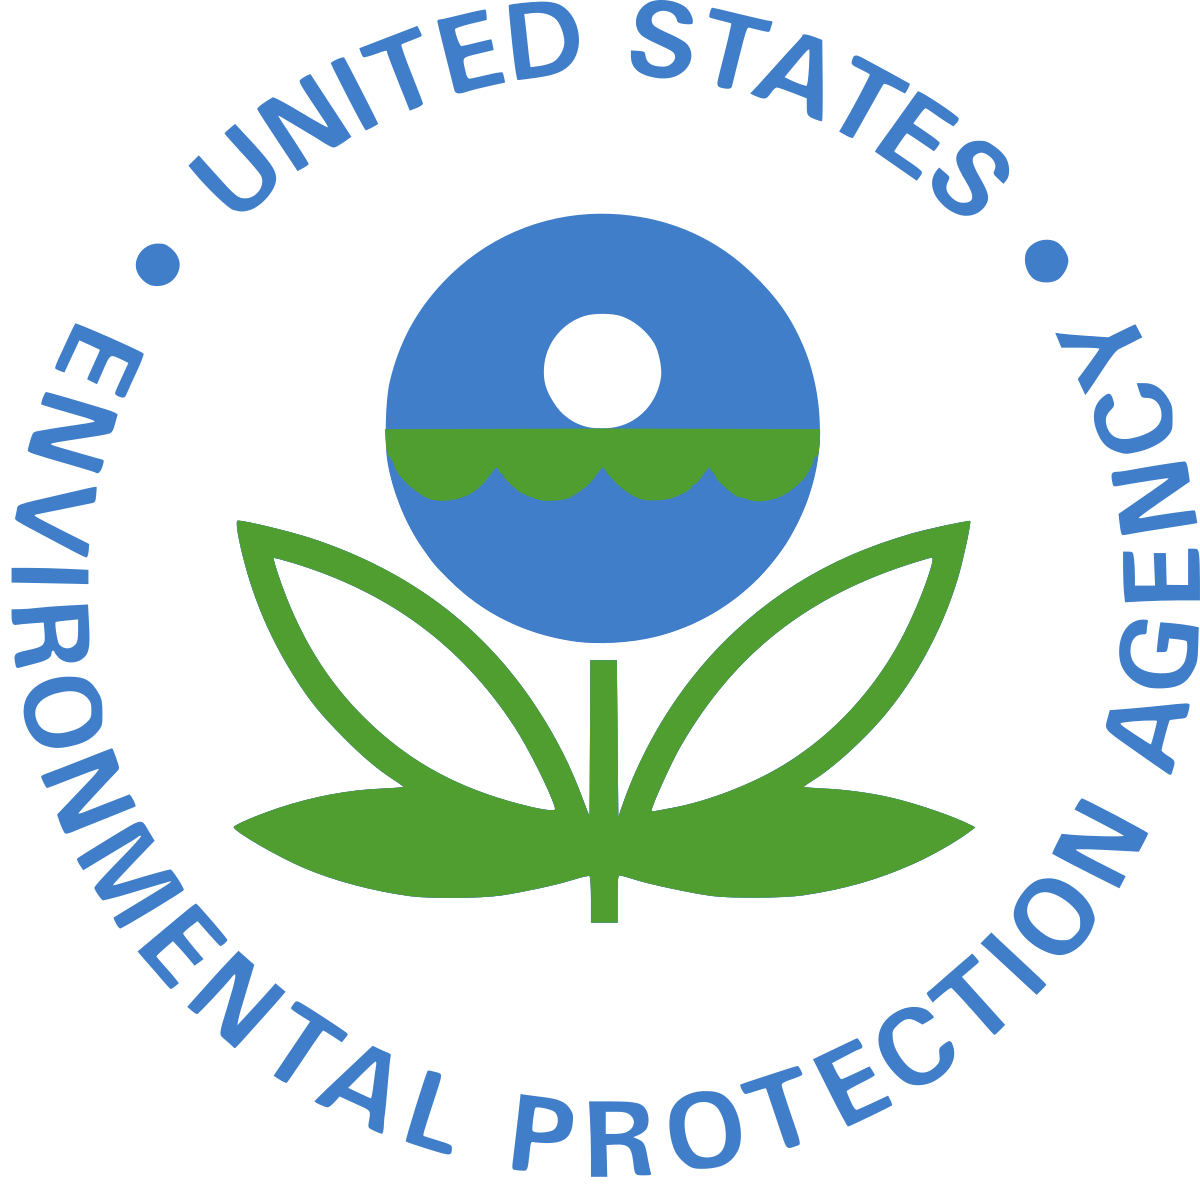 EPA Lead Safe Logo - United States Environmental Protection Agency